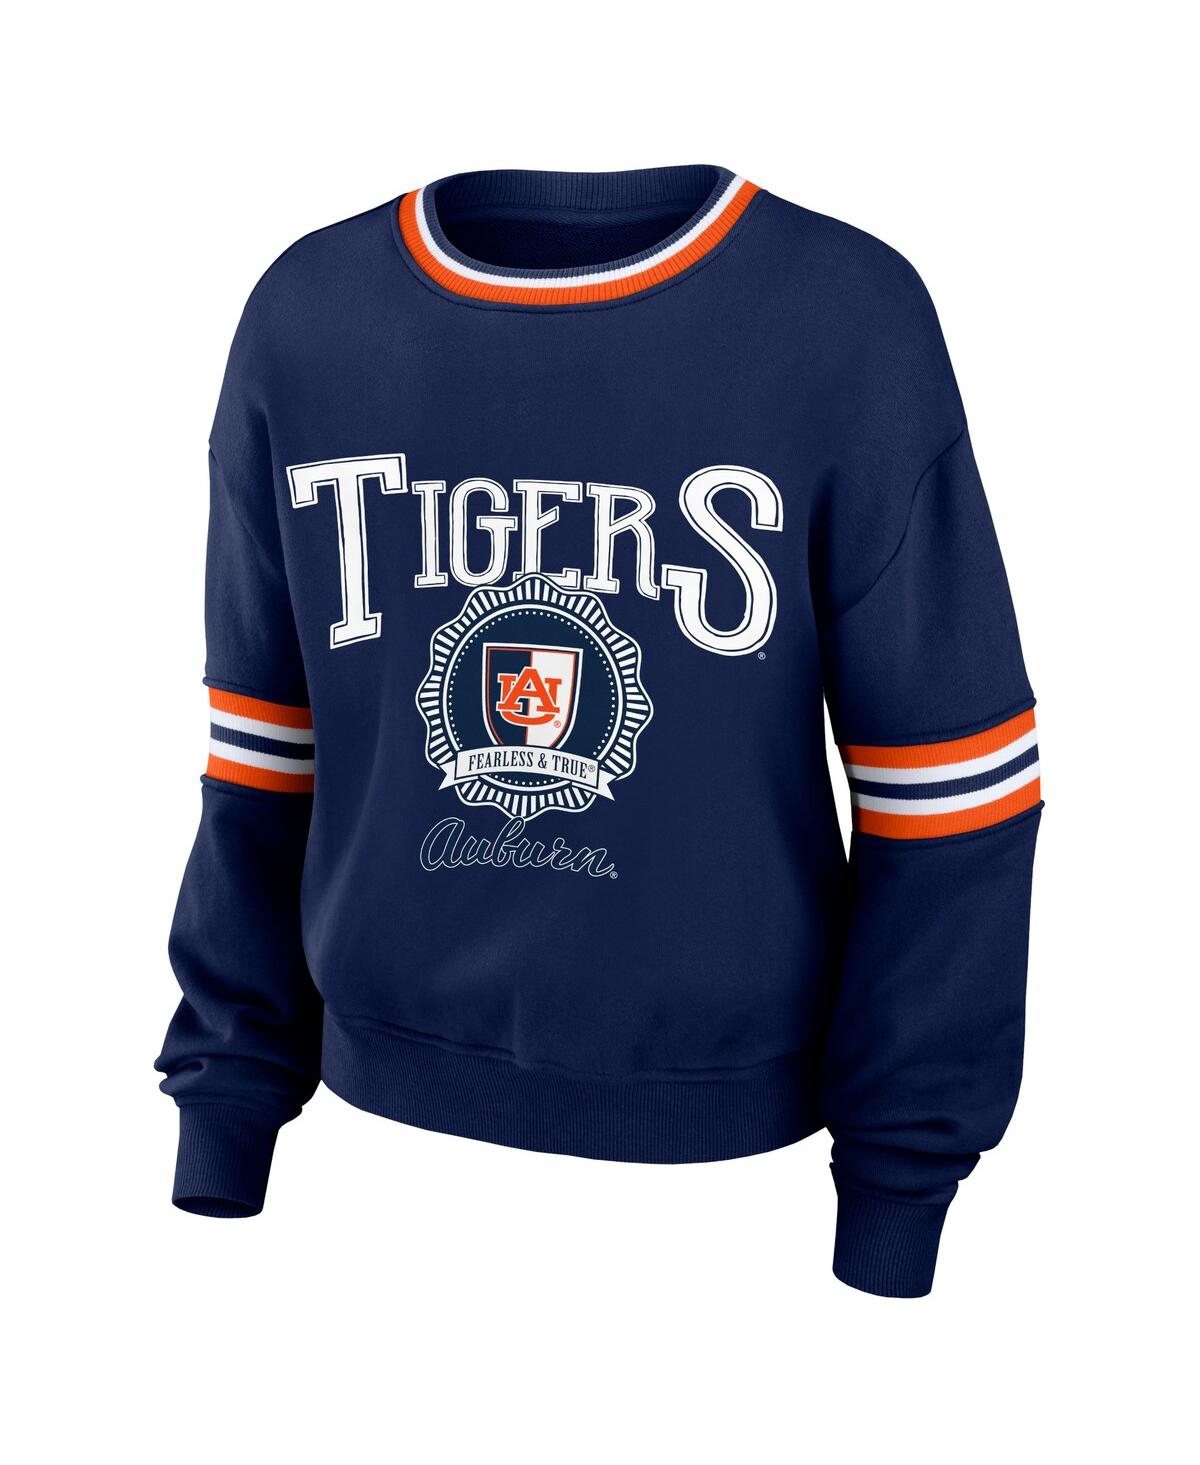 Shop Wear By Erin Andrews Women's  Navy Distressed Auburn Tigers Vintage-like Pullover Sweatshirt